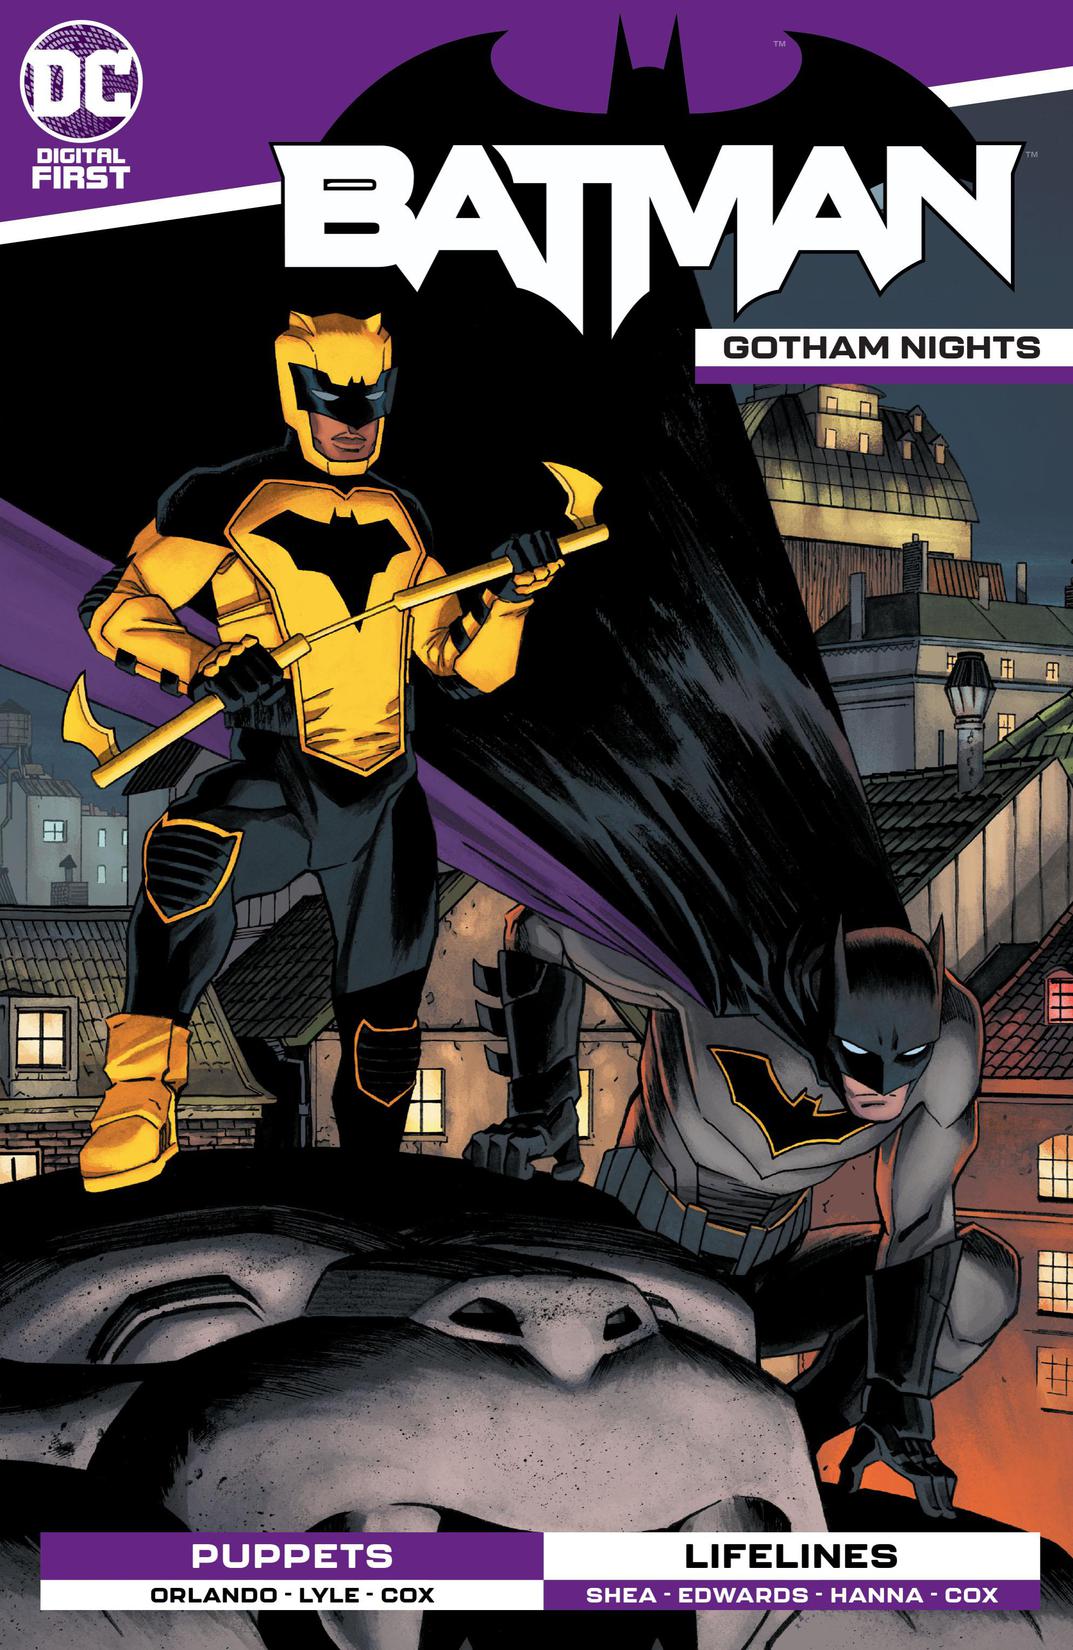 Batman: Gotham Nights #8 preview images